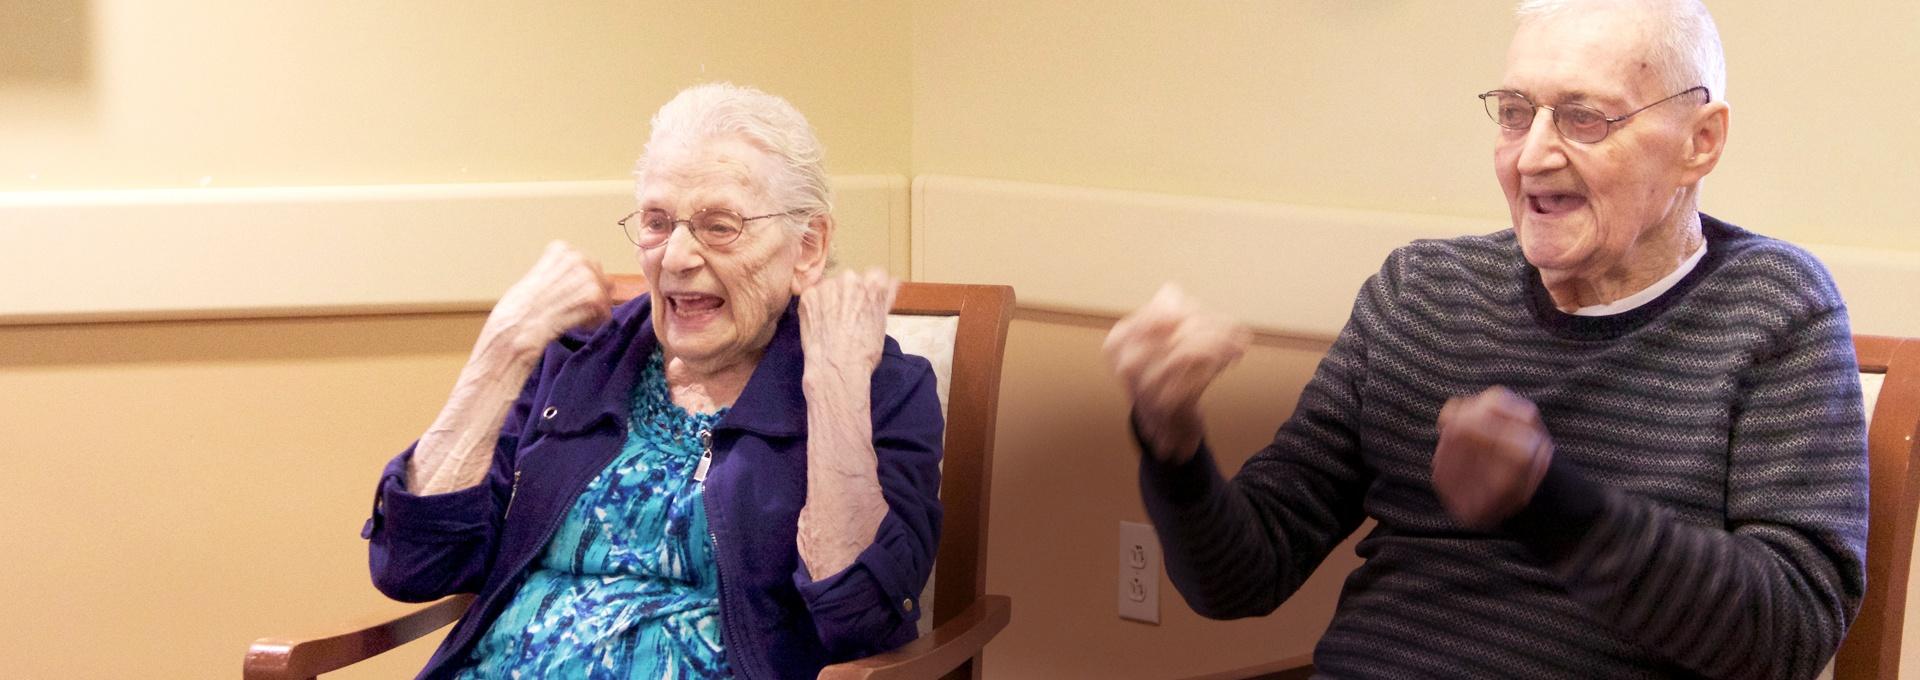 Two elderly people enjoying the moment